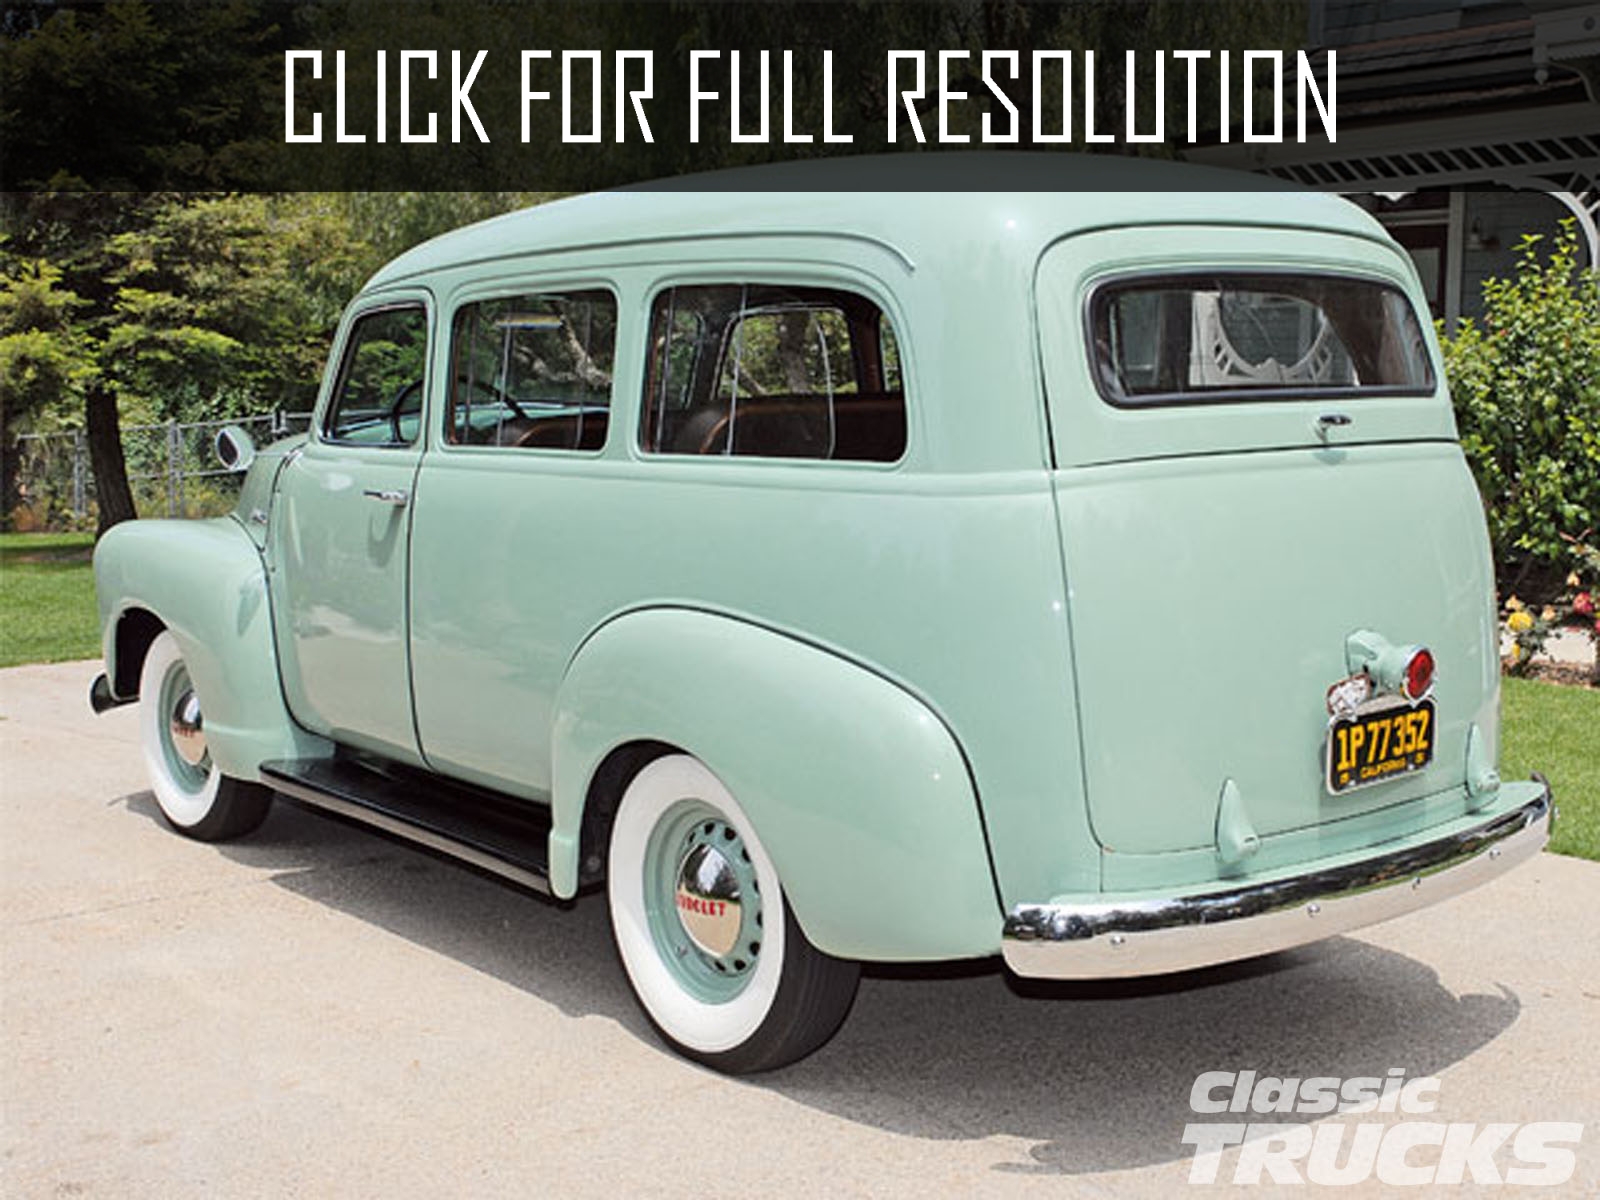 Chevrolet Suburban 1950